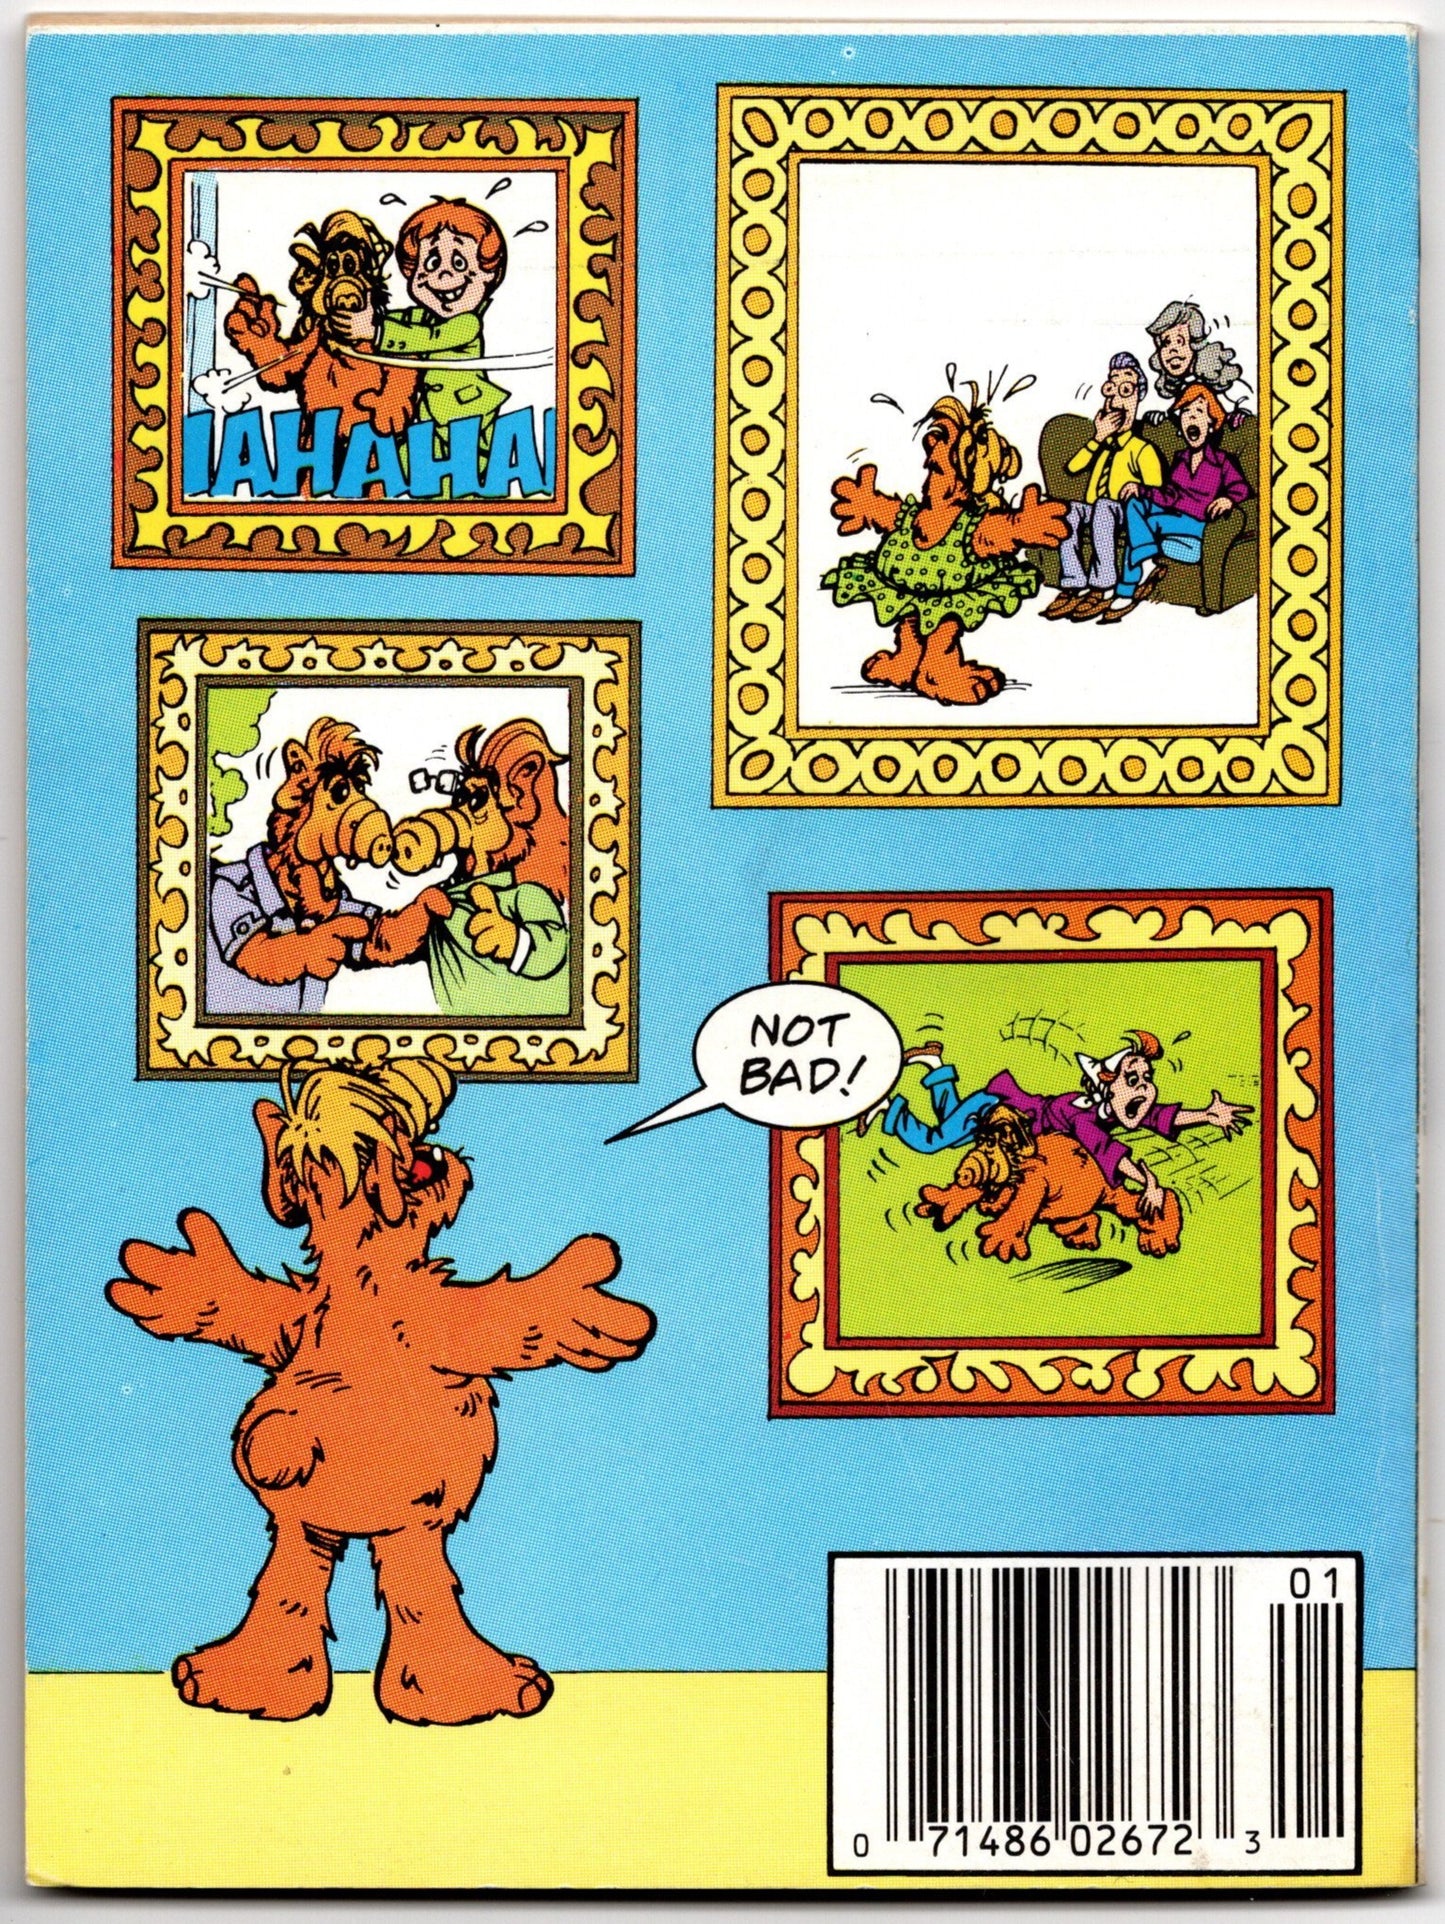 Alf Comics Magazine #2 Digest